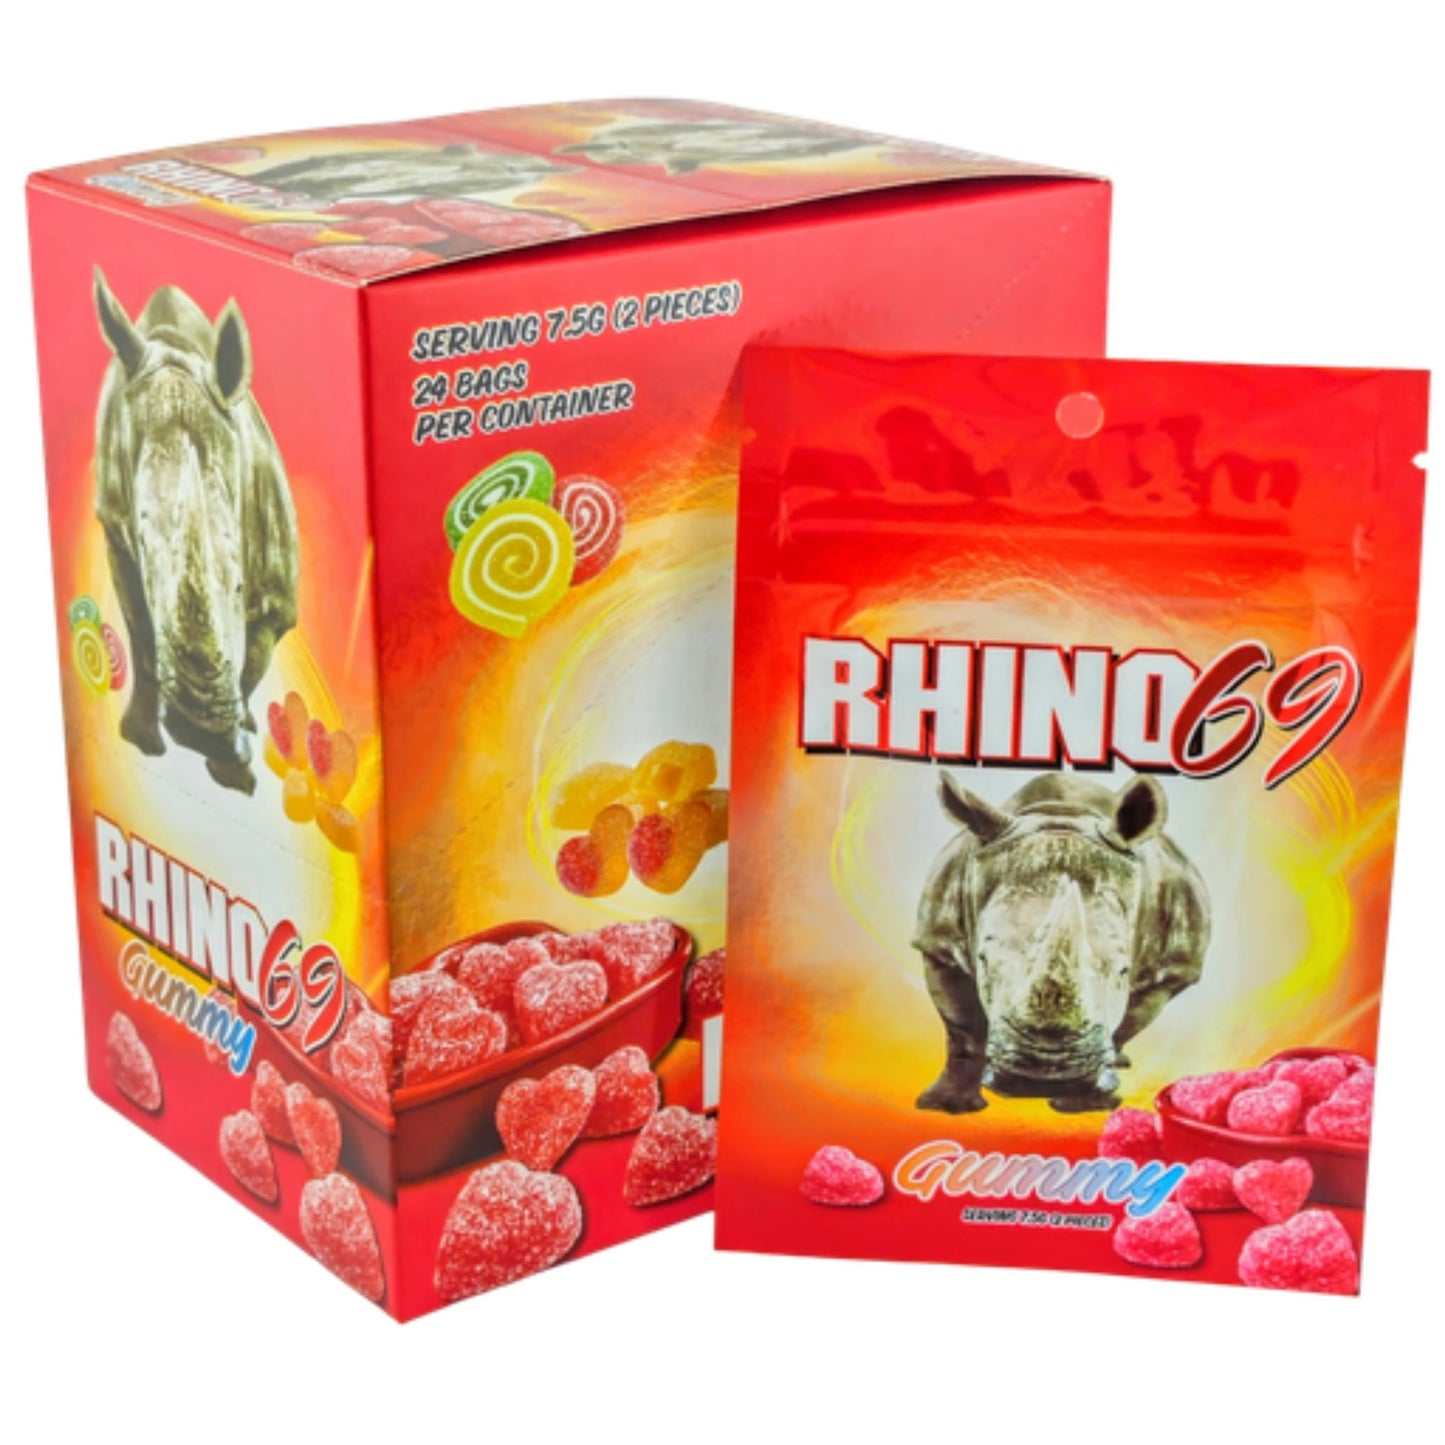 Rhino 69 Gummy, Serving (7.5g - 2 Pcs) |Pack of 24 Bags